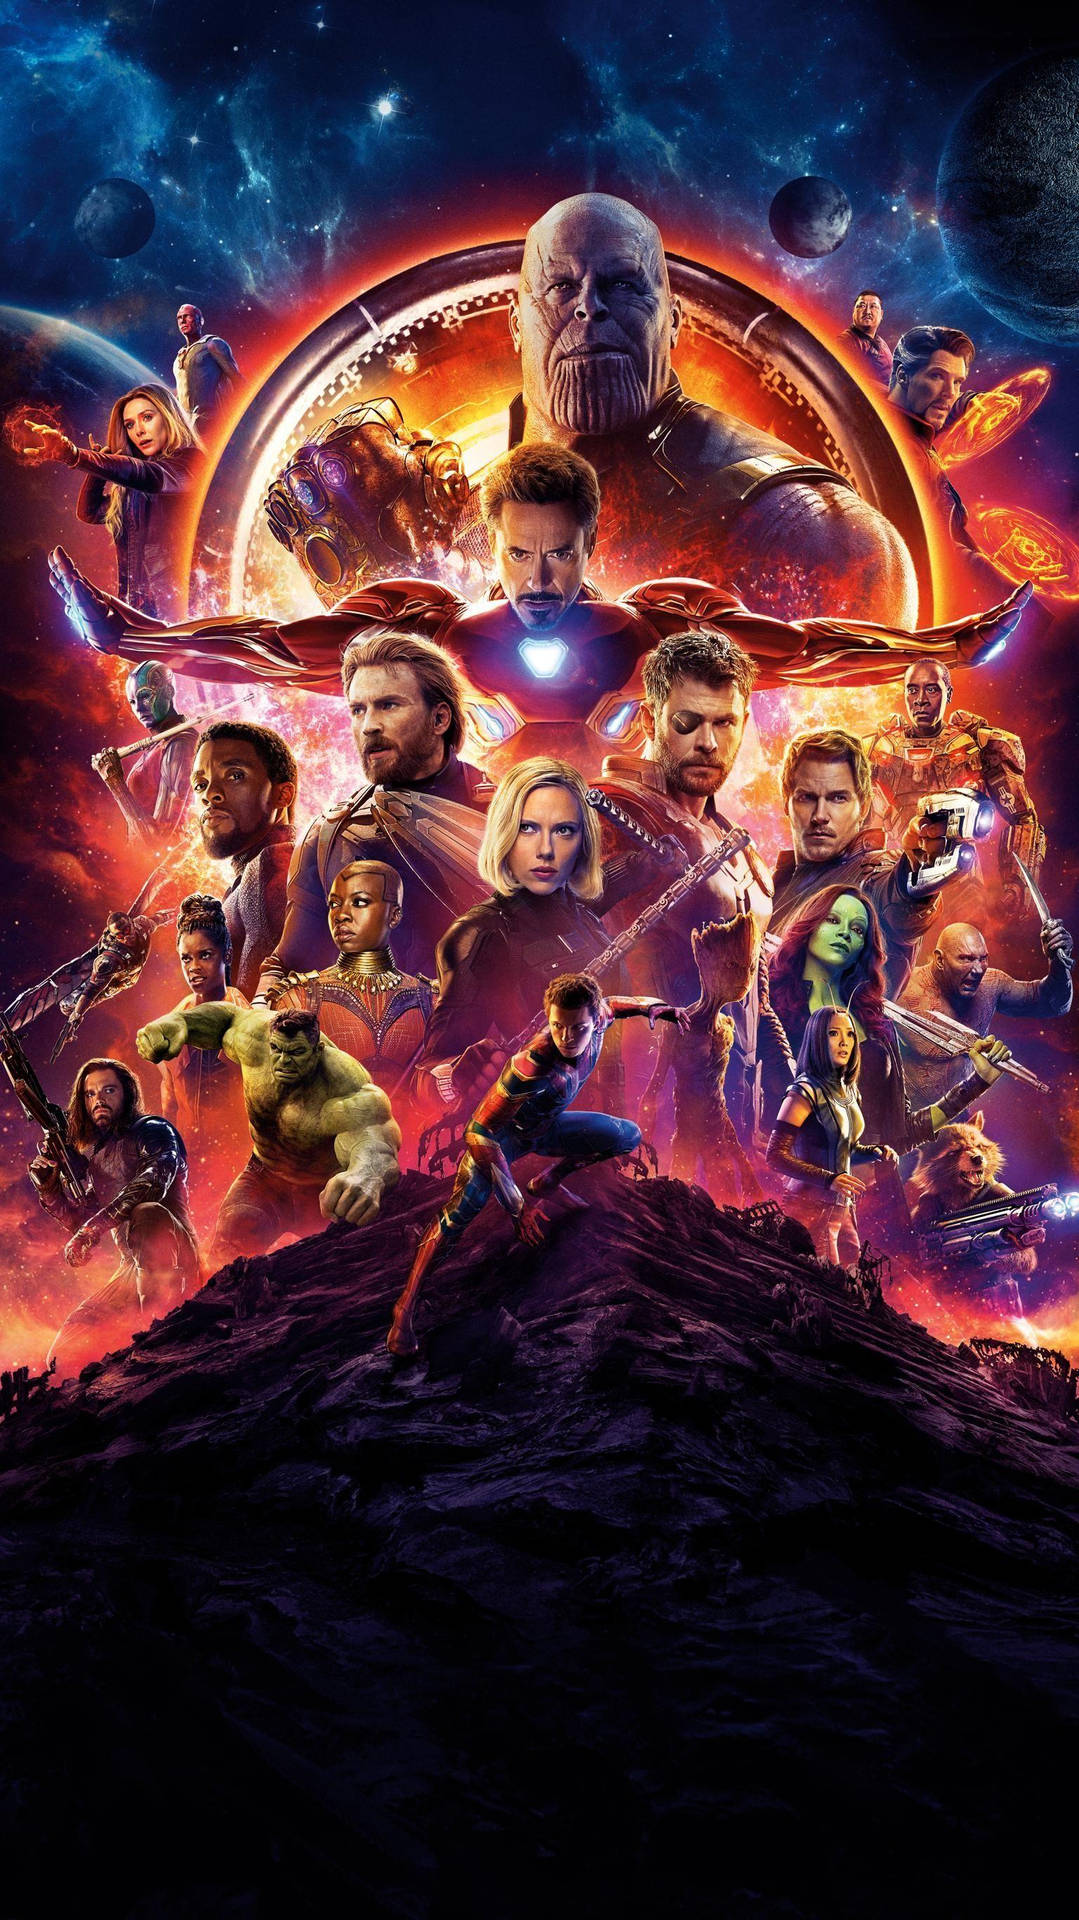 4ktelefon Bakgrund Avengers Infinity War Wallpaper